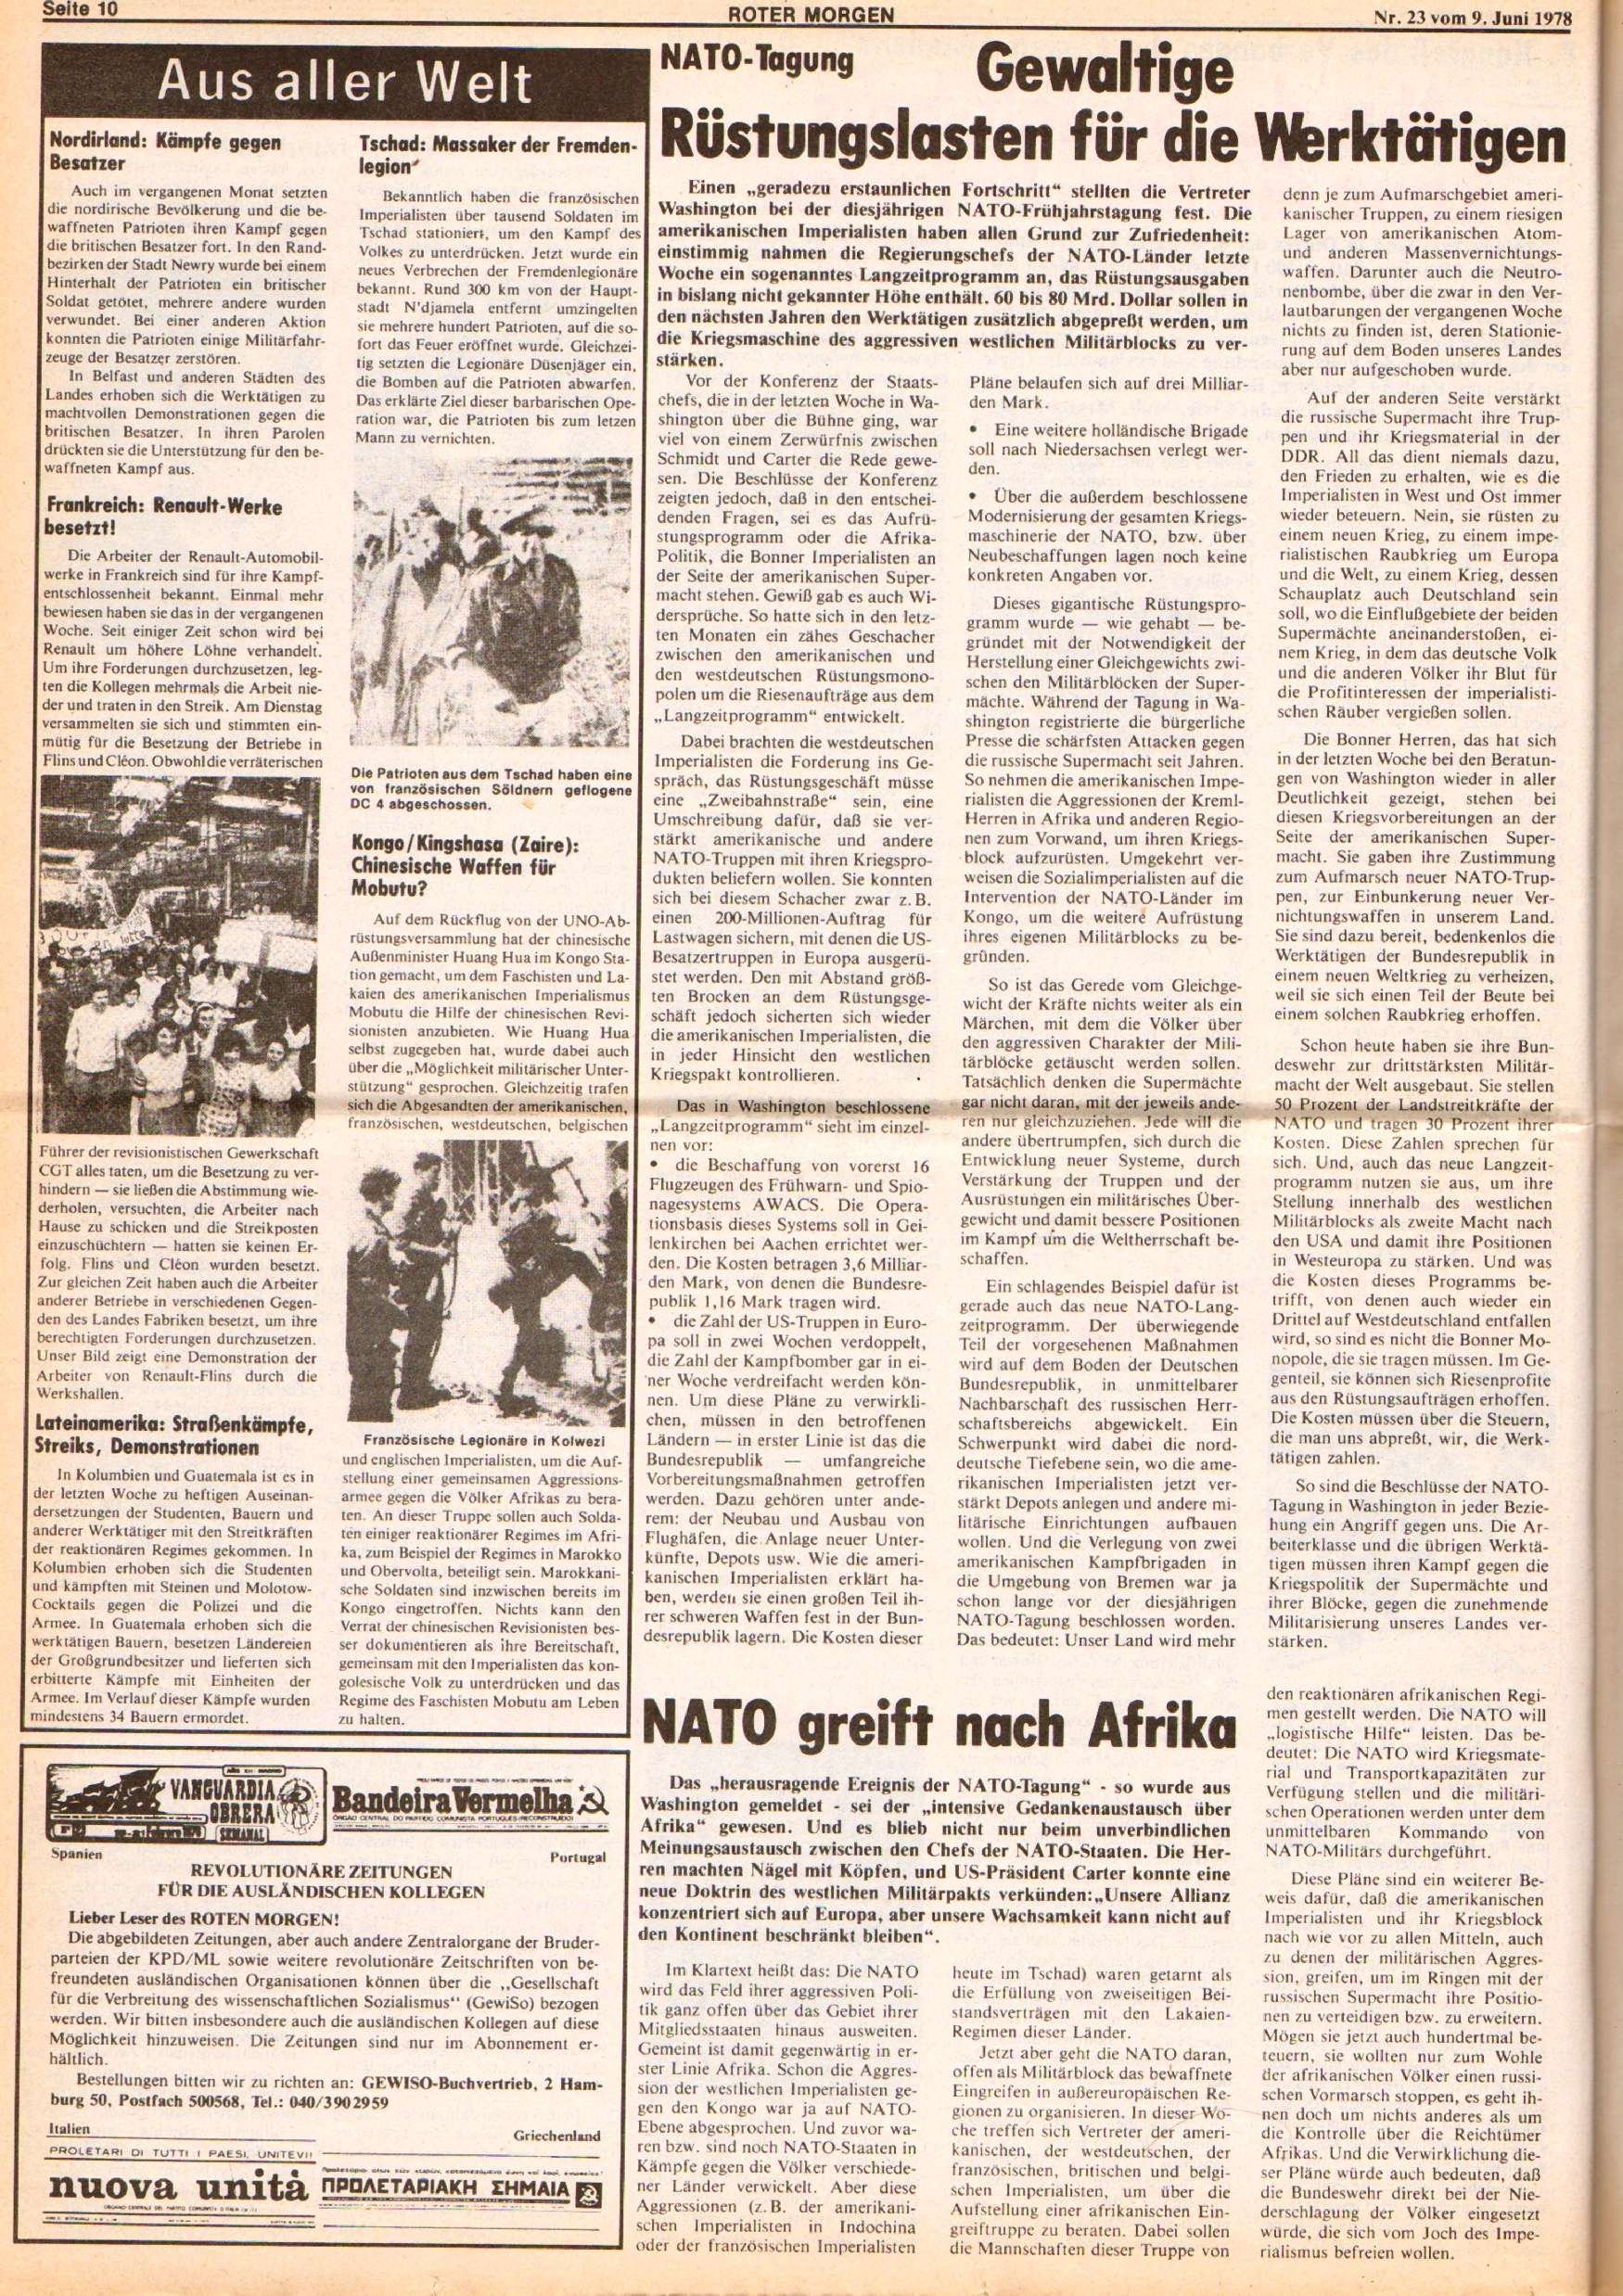 Roter Morgen, 12. Jg., 9. Juni 1978, Nr. 23, Seite 10